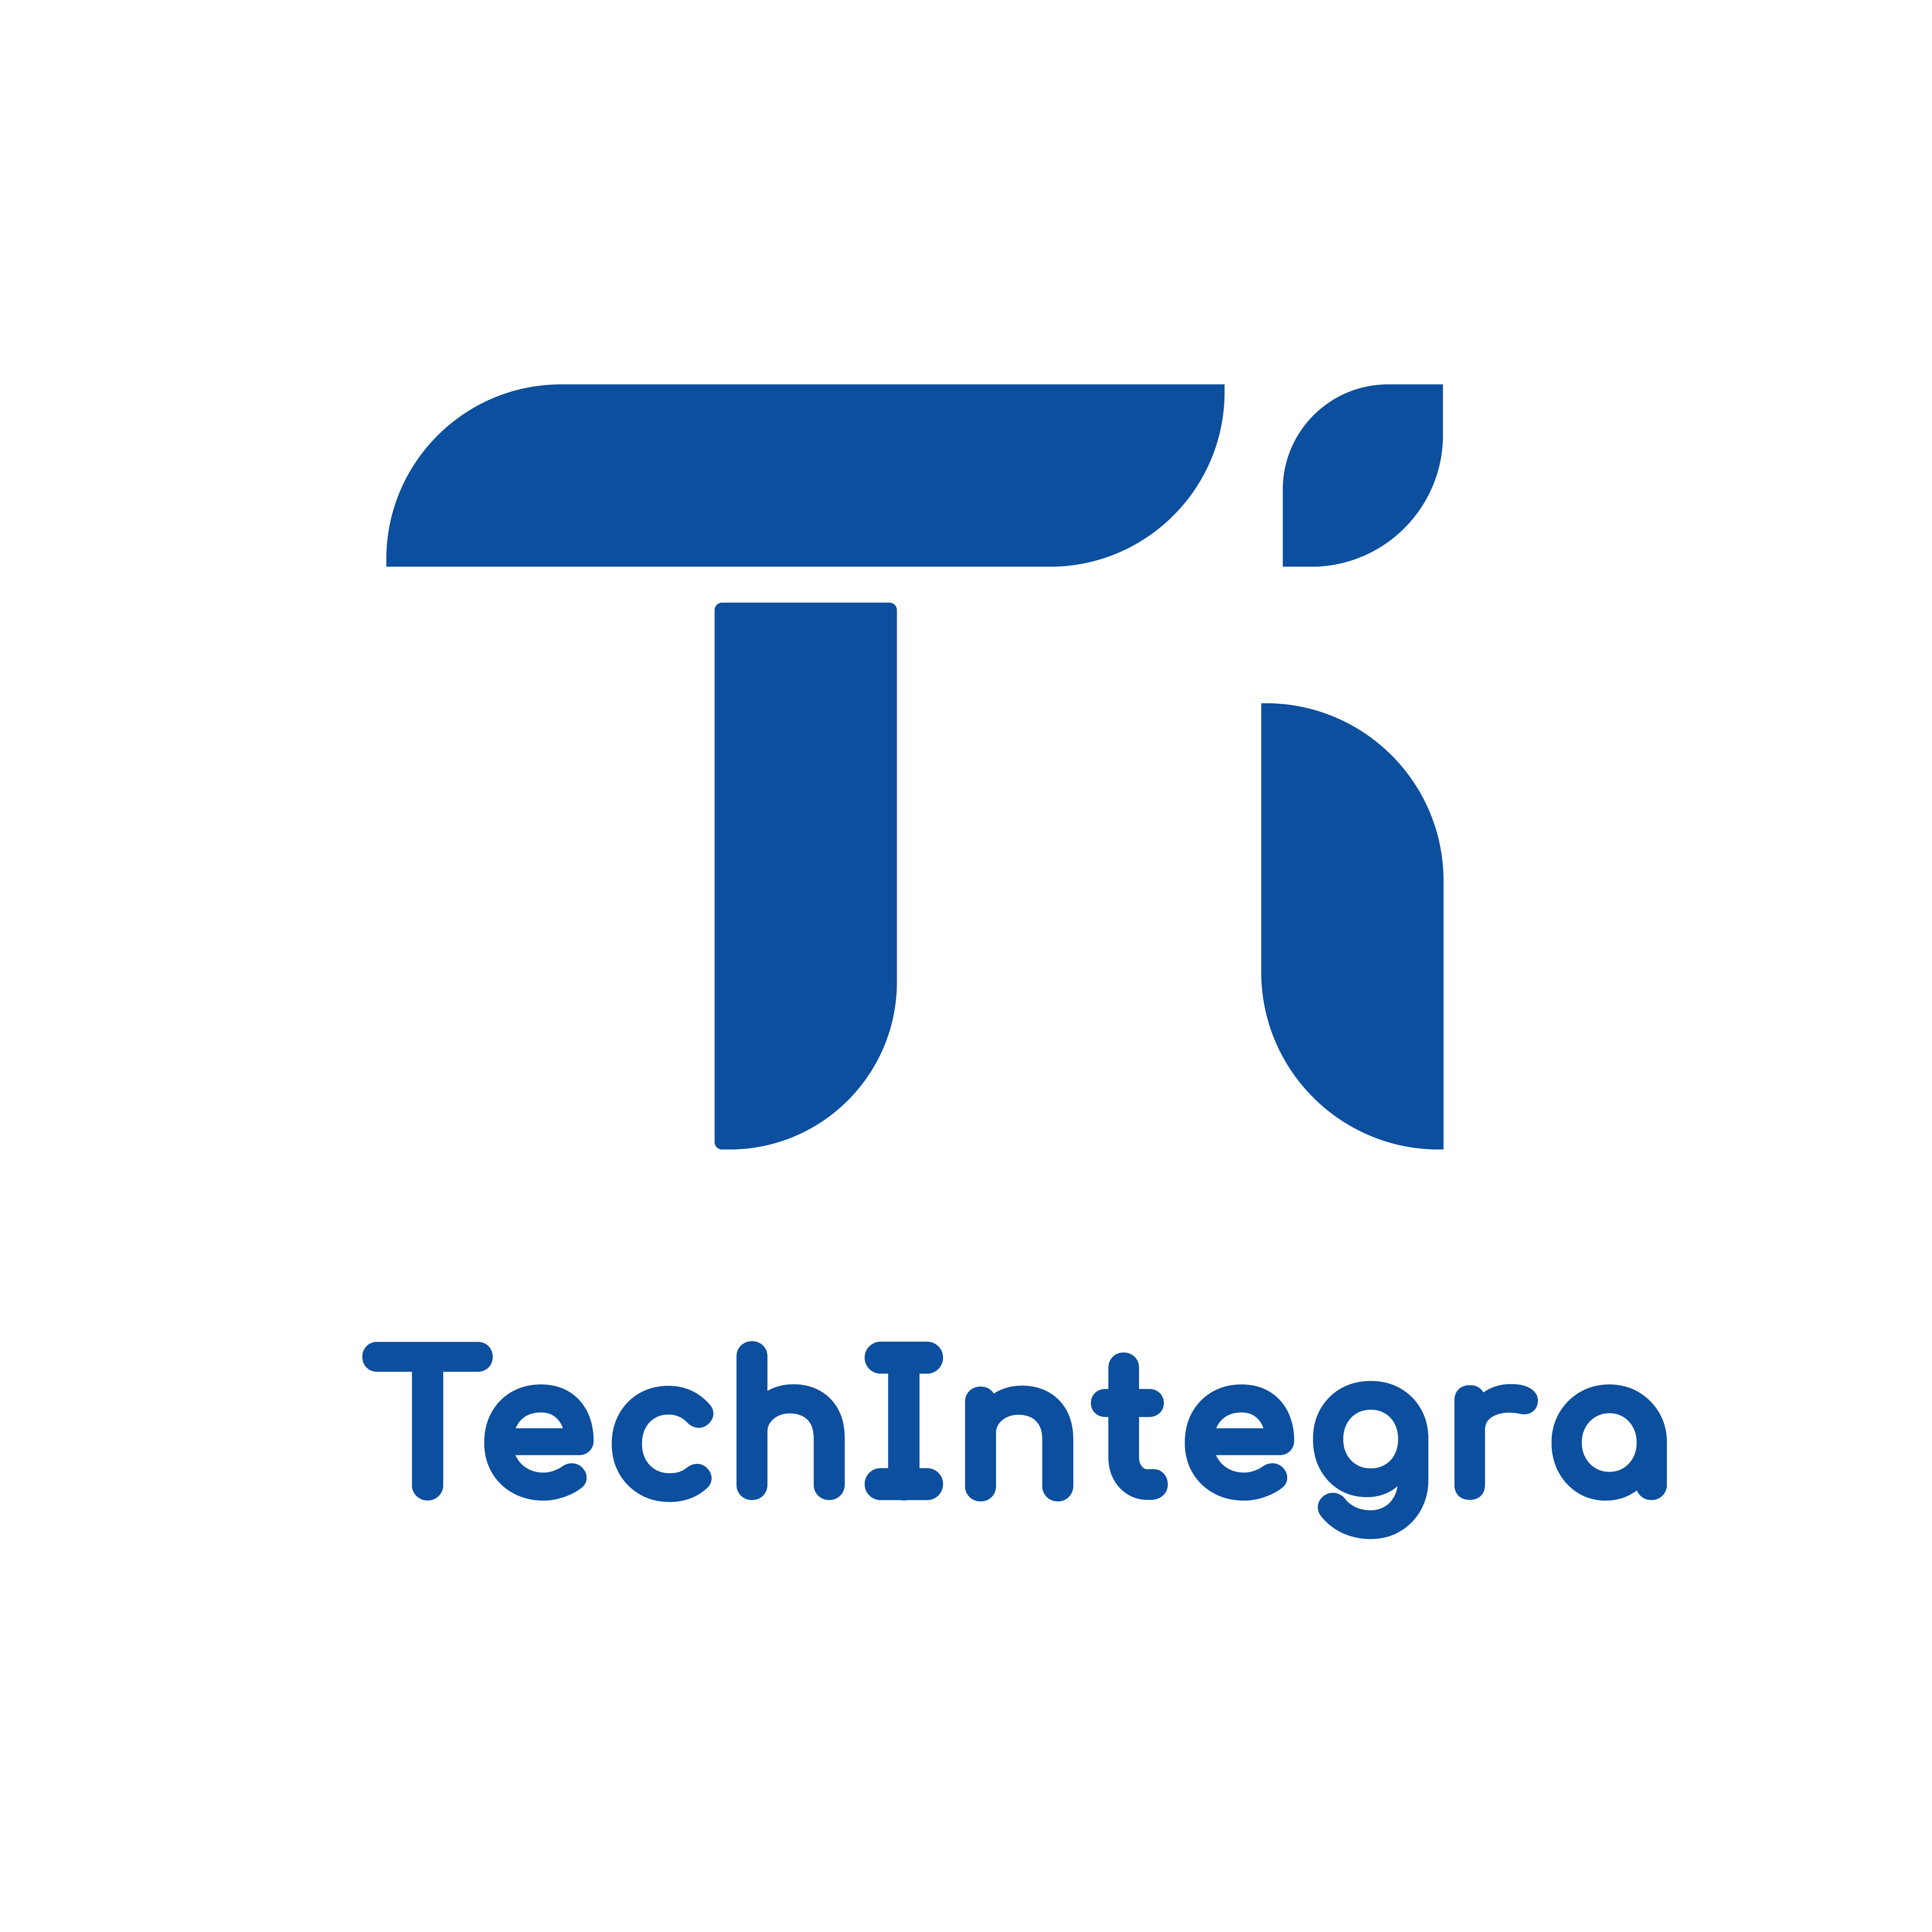 TechIntegra